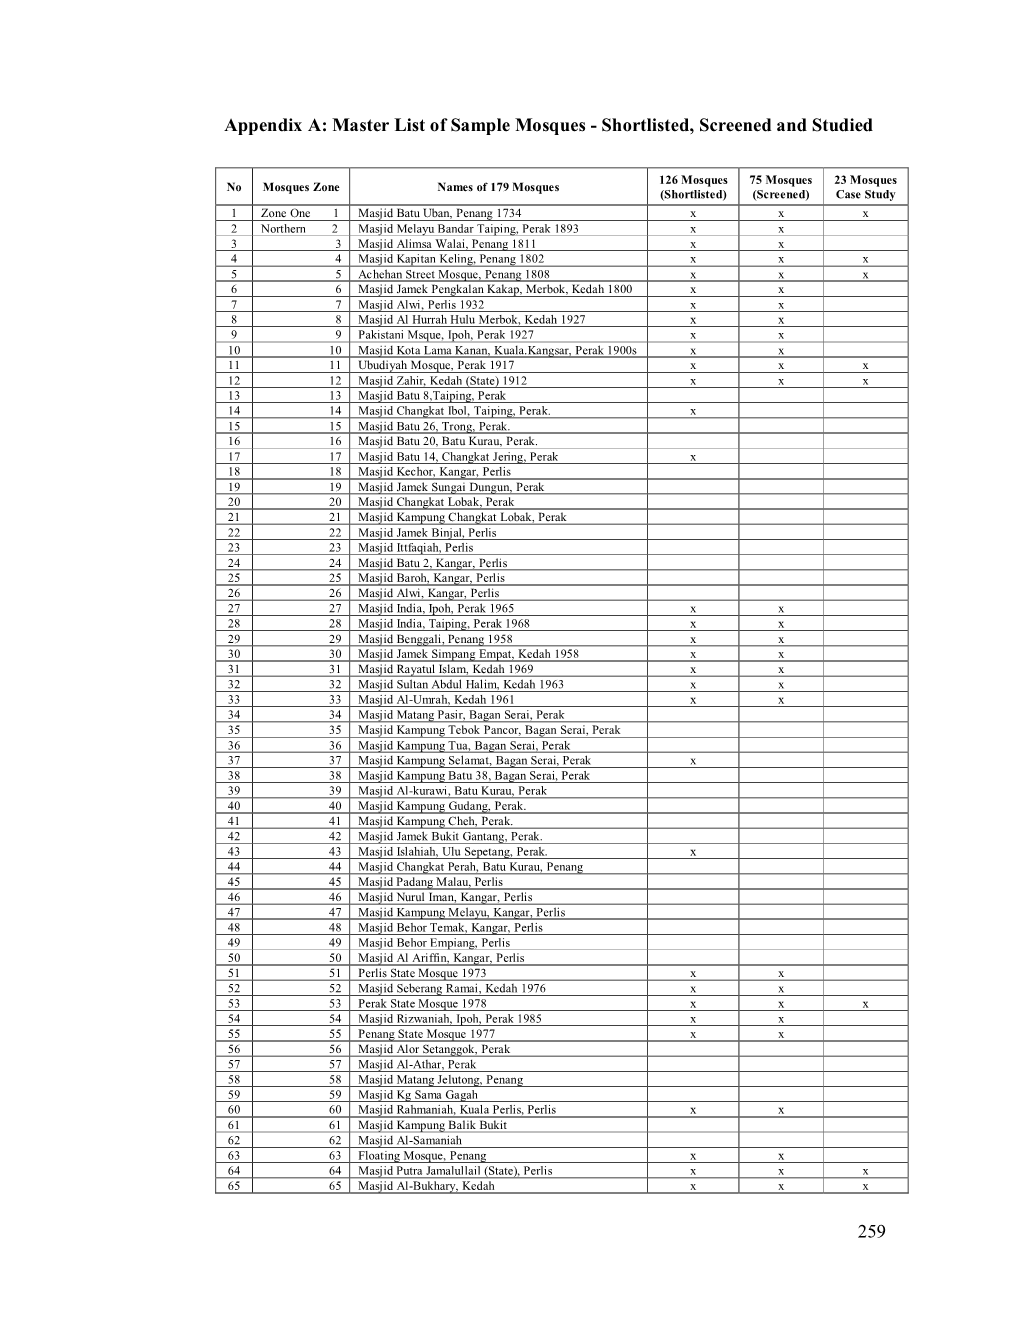 259 Appendix A: Master List of Sample Mosques